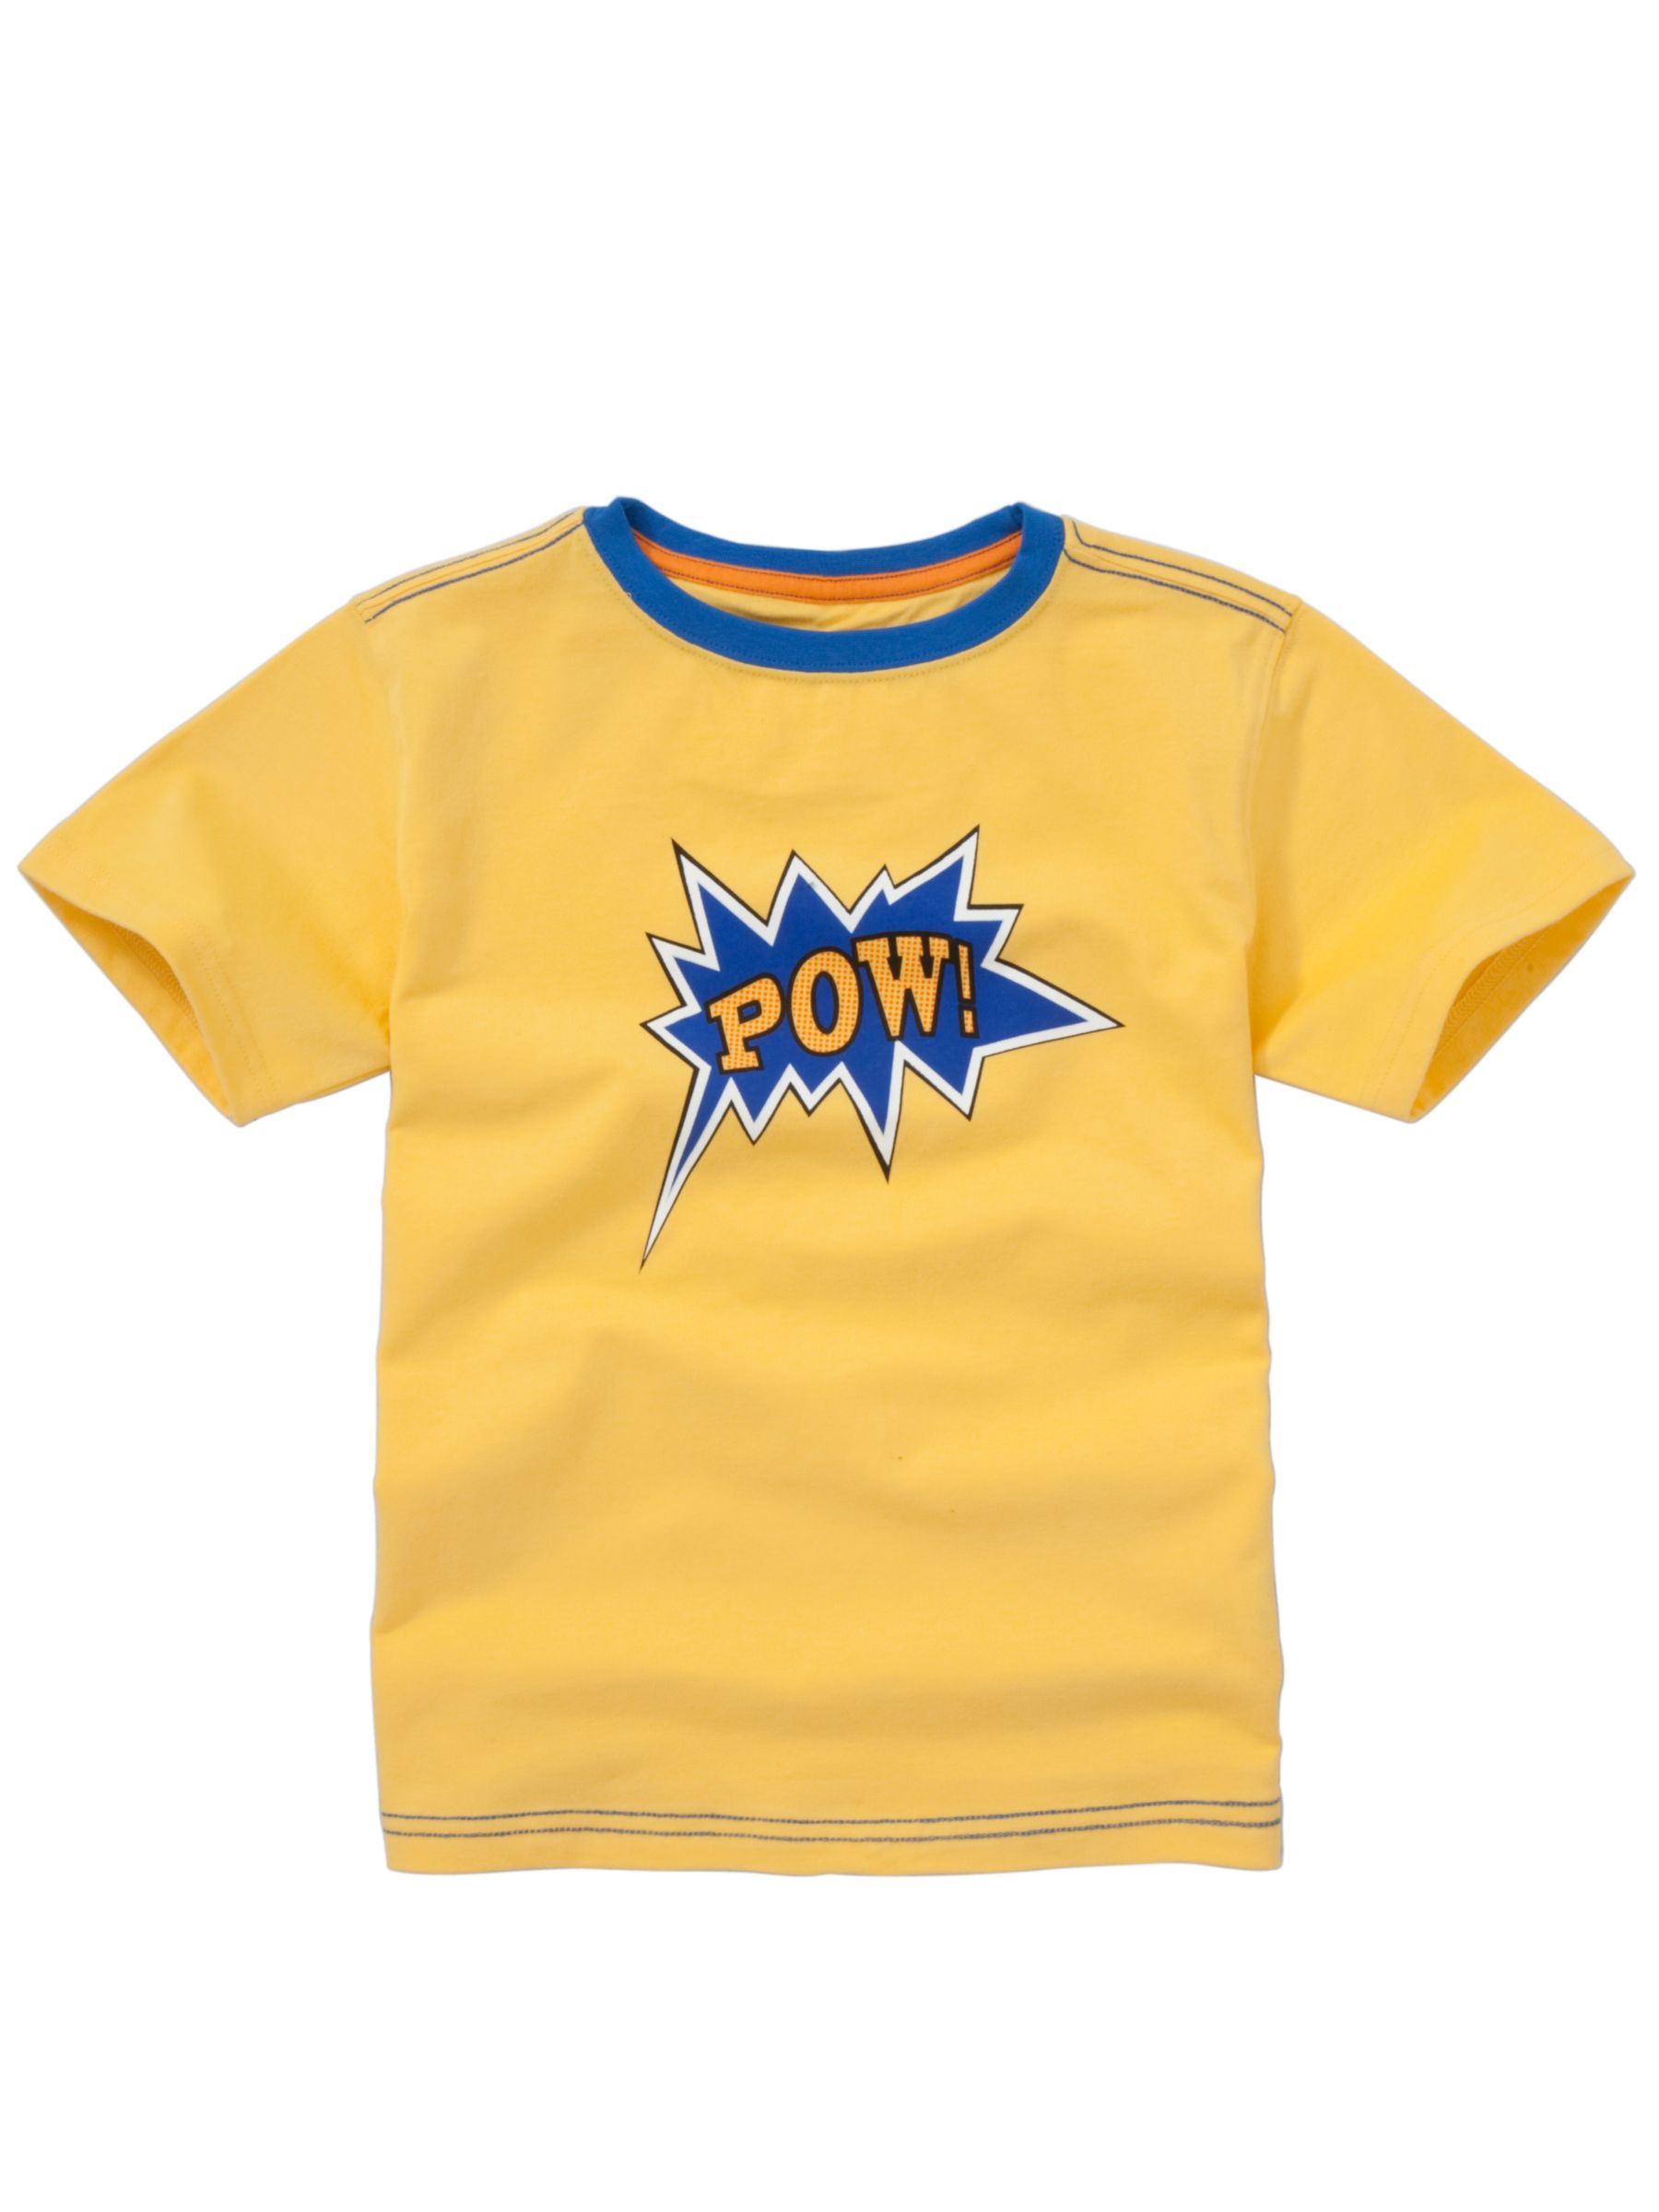 Pow Graphic T-Shirt, Yellow